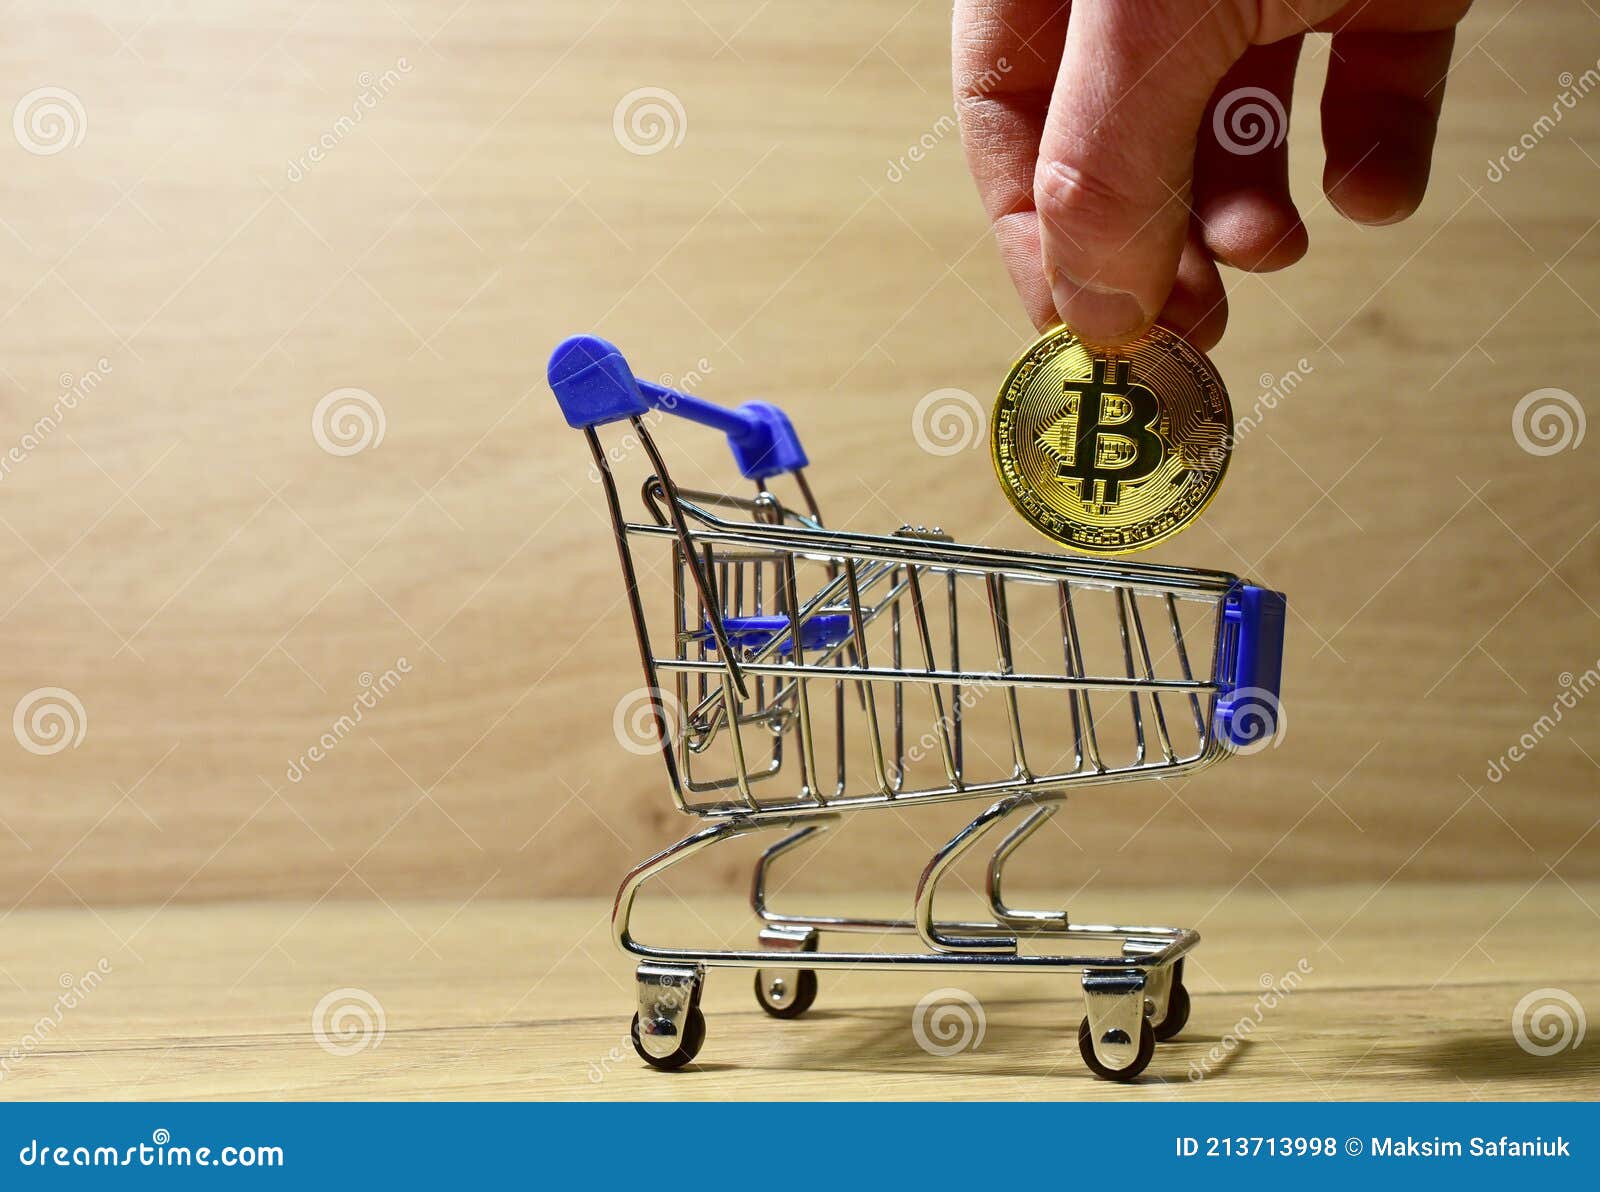 shopping bitcoin